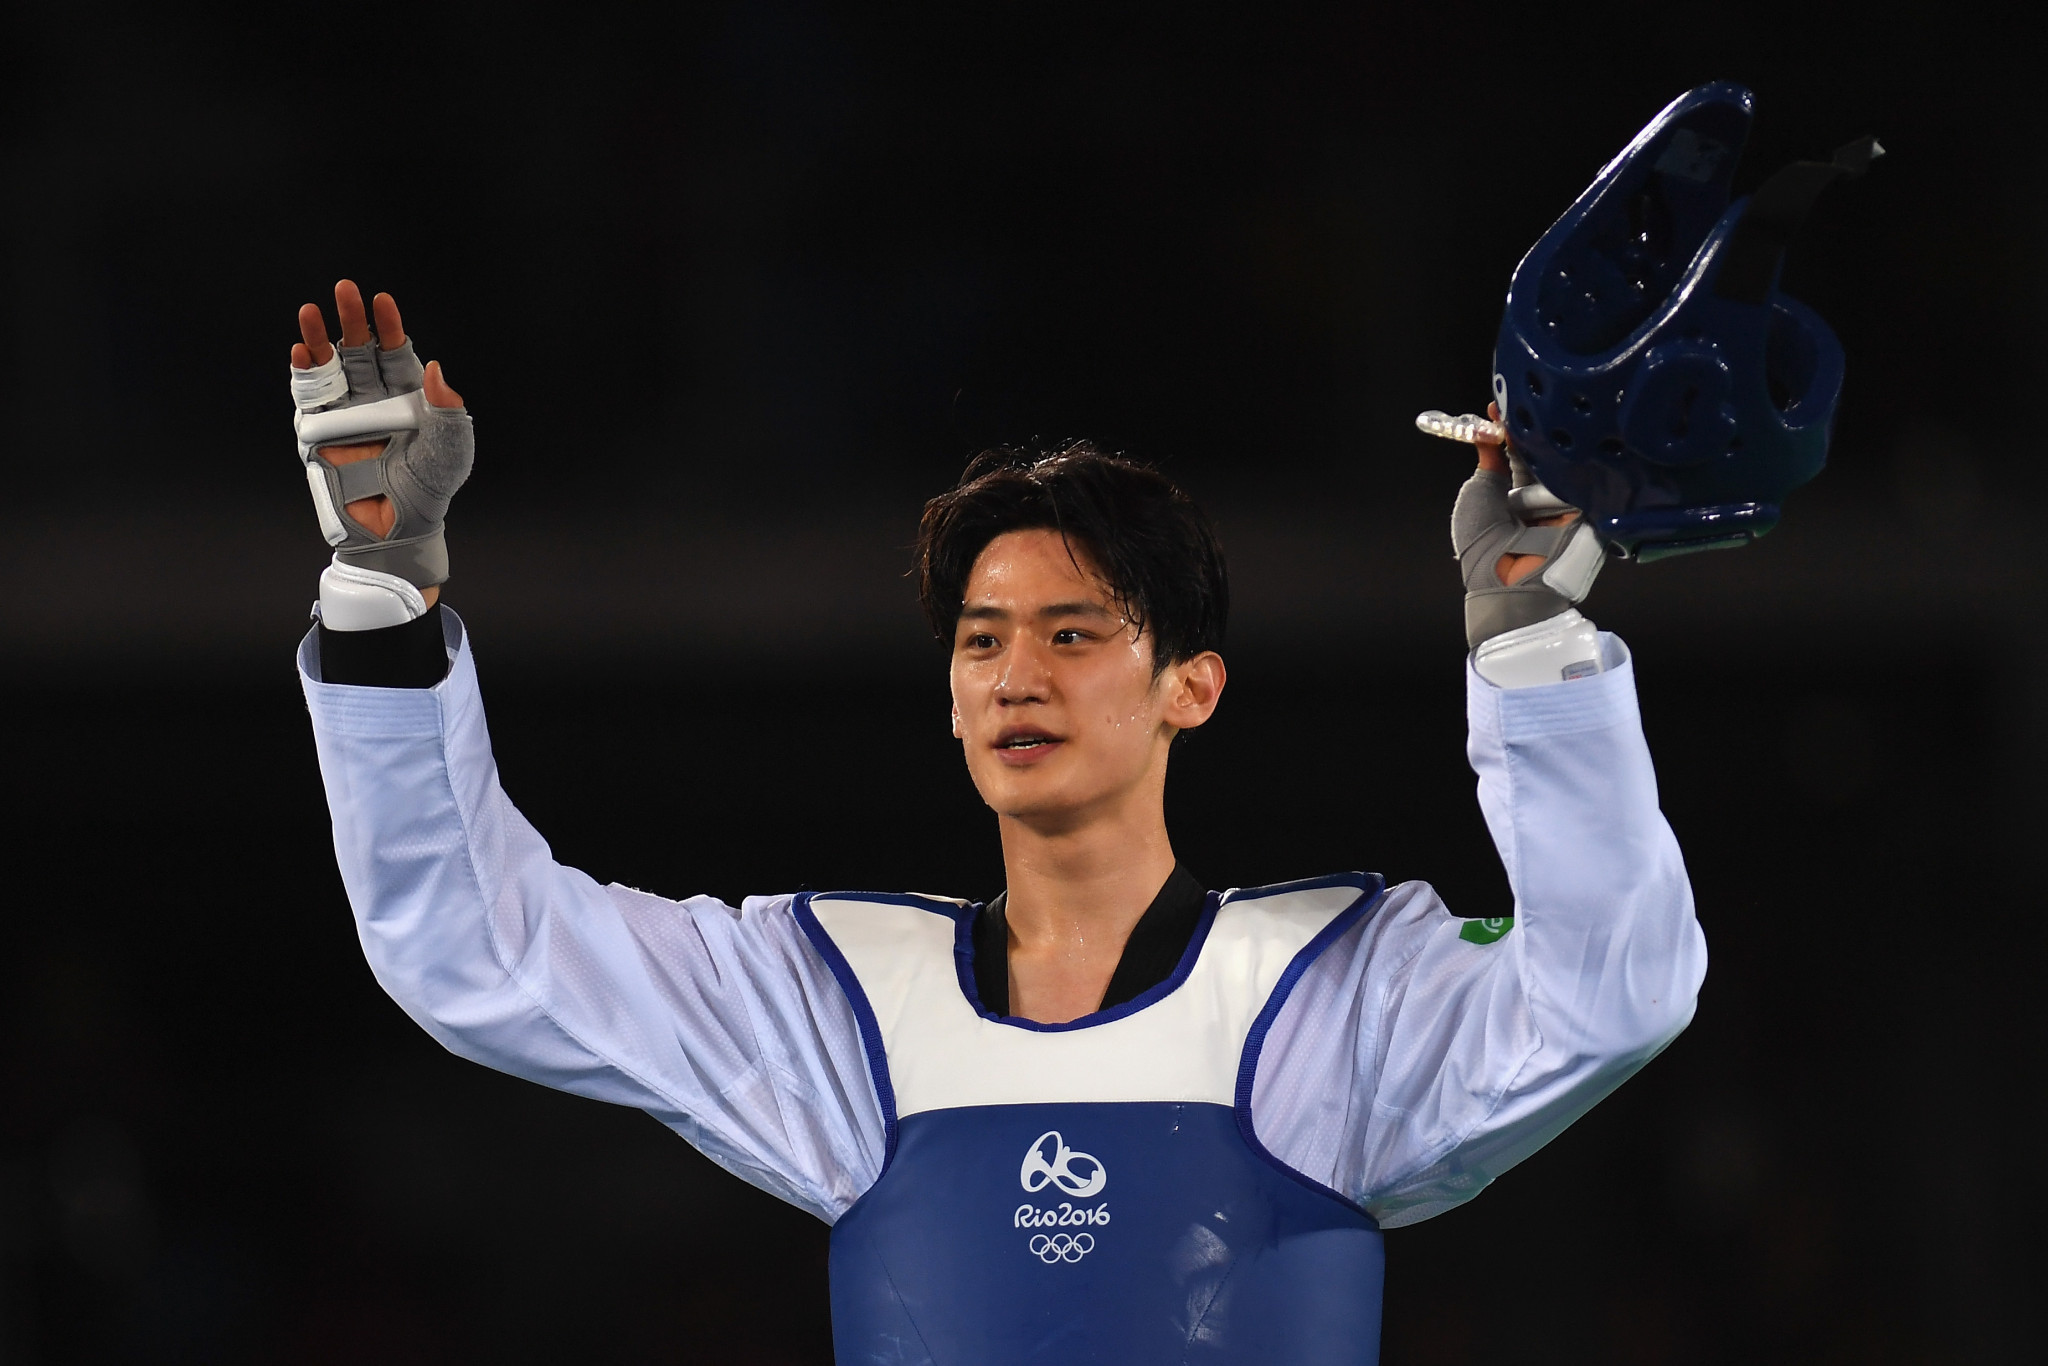 World champion Lee tops podium at World Taekwondo Grand Prix in Rome